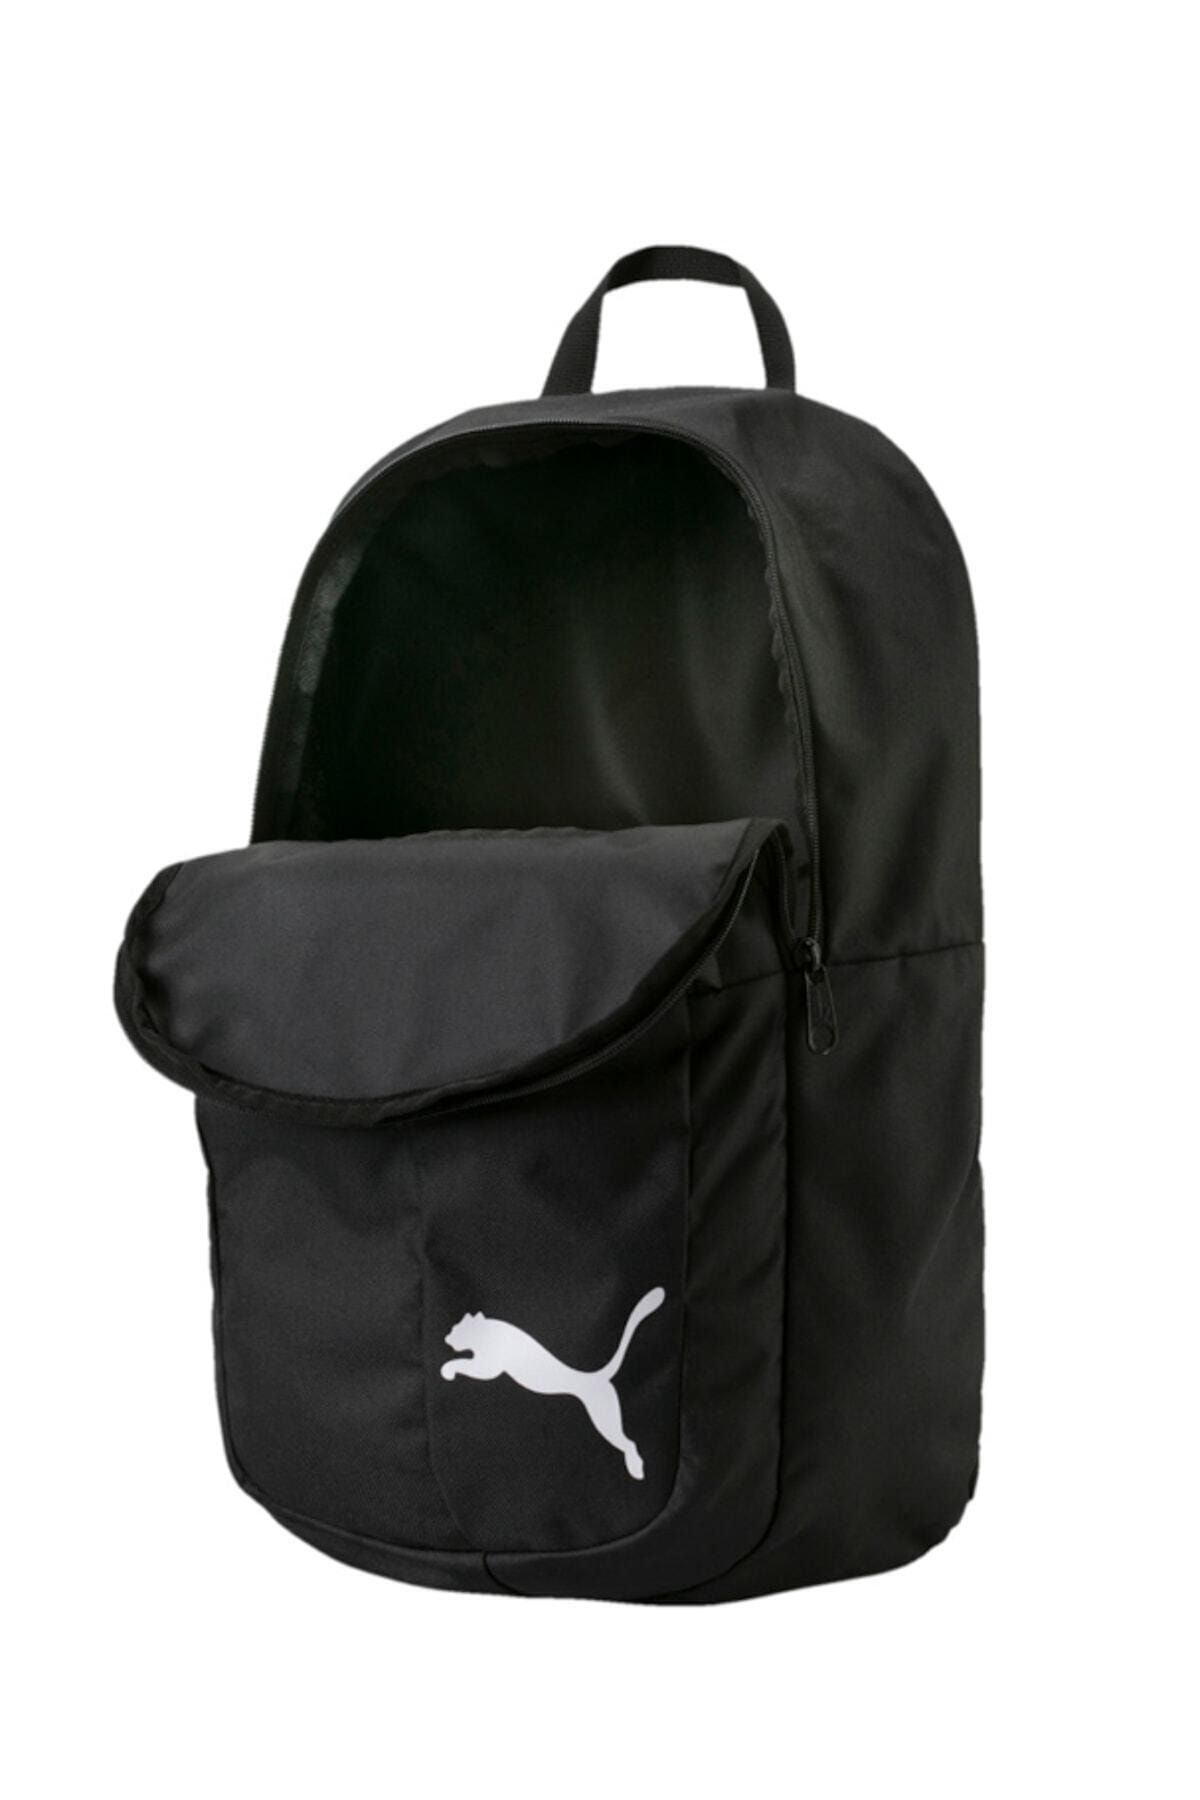 Puma Unisex Siyah Pro Training Backpack Sırt Çantası 074898-01